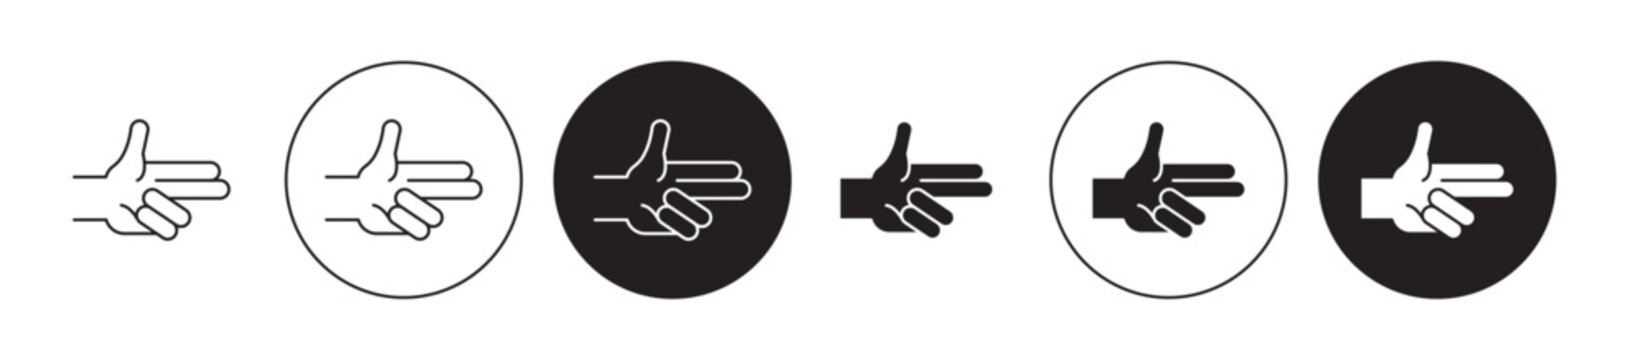 Bang bang gesture line icon set. Hand finger gun icon in black color for ui designs.